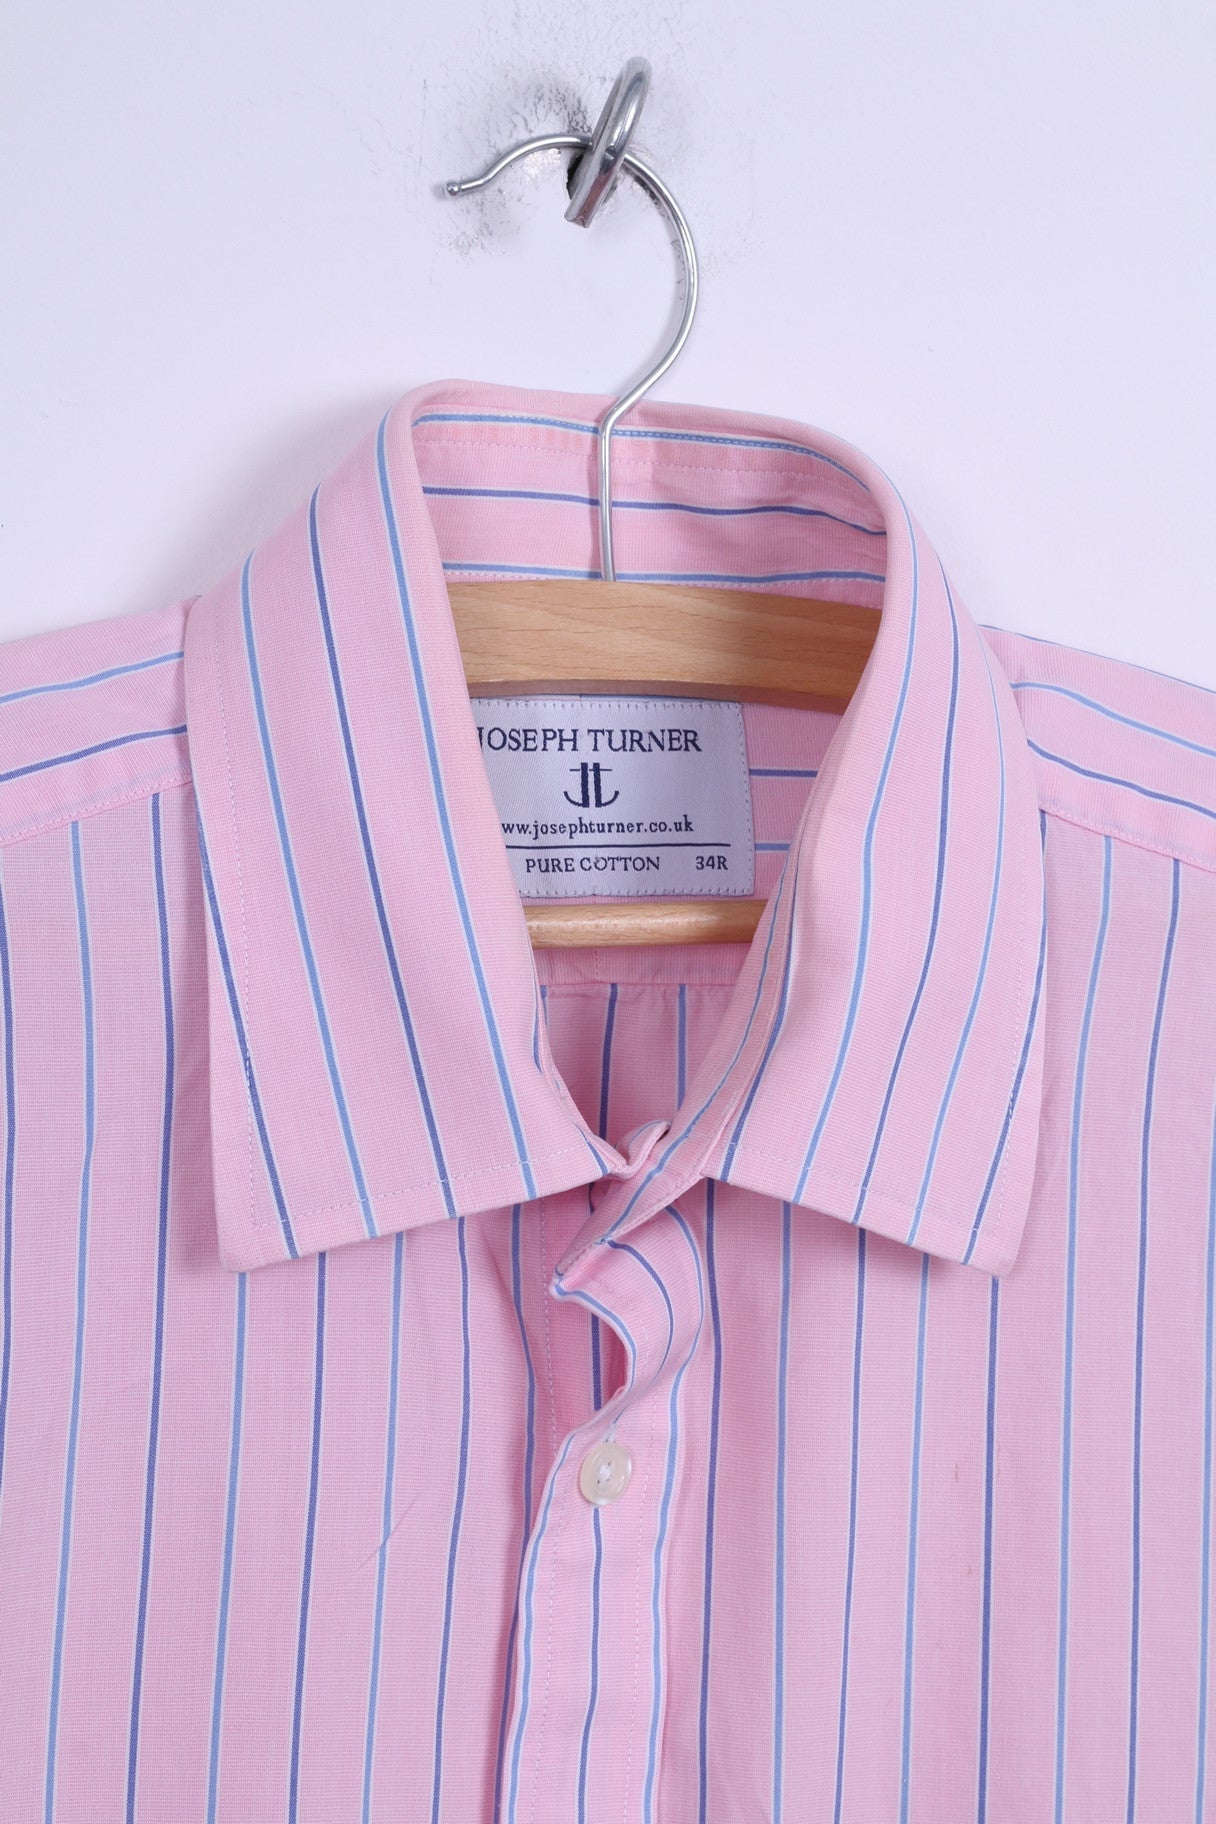 Joseph Turner Mens 34 16.5 XL Casual Shirt Pink Striped Cotton Long Sl ...